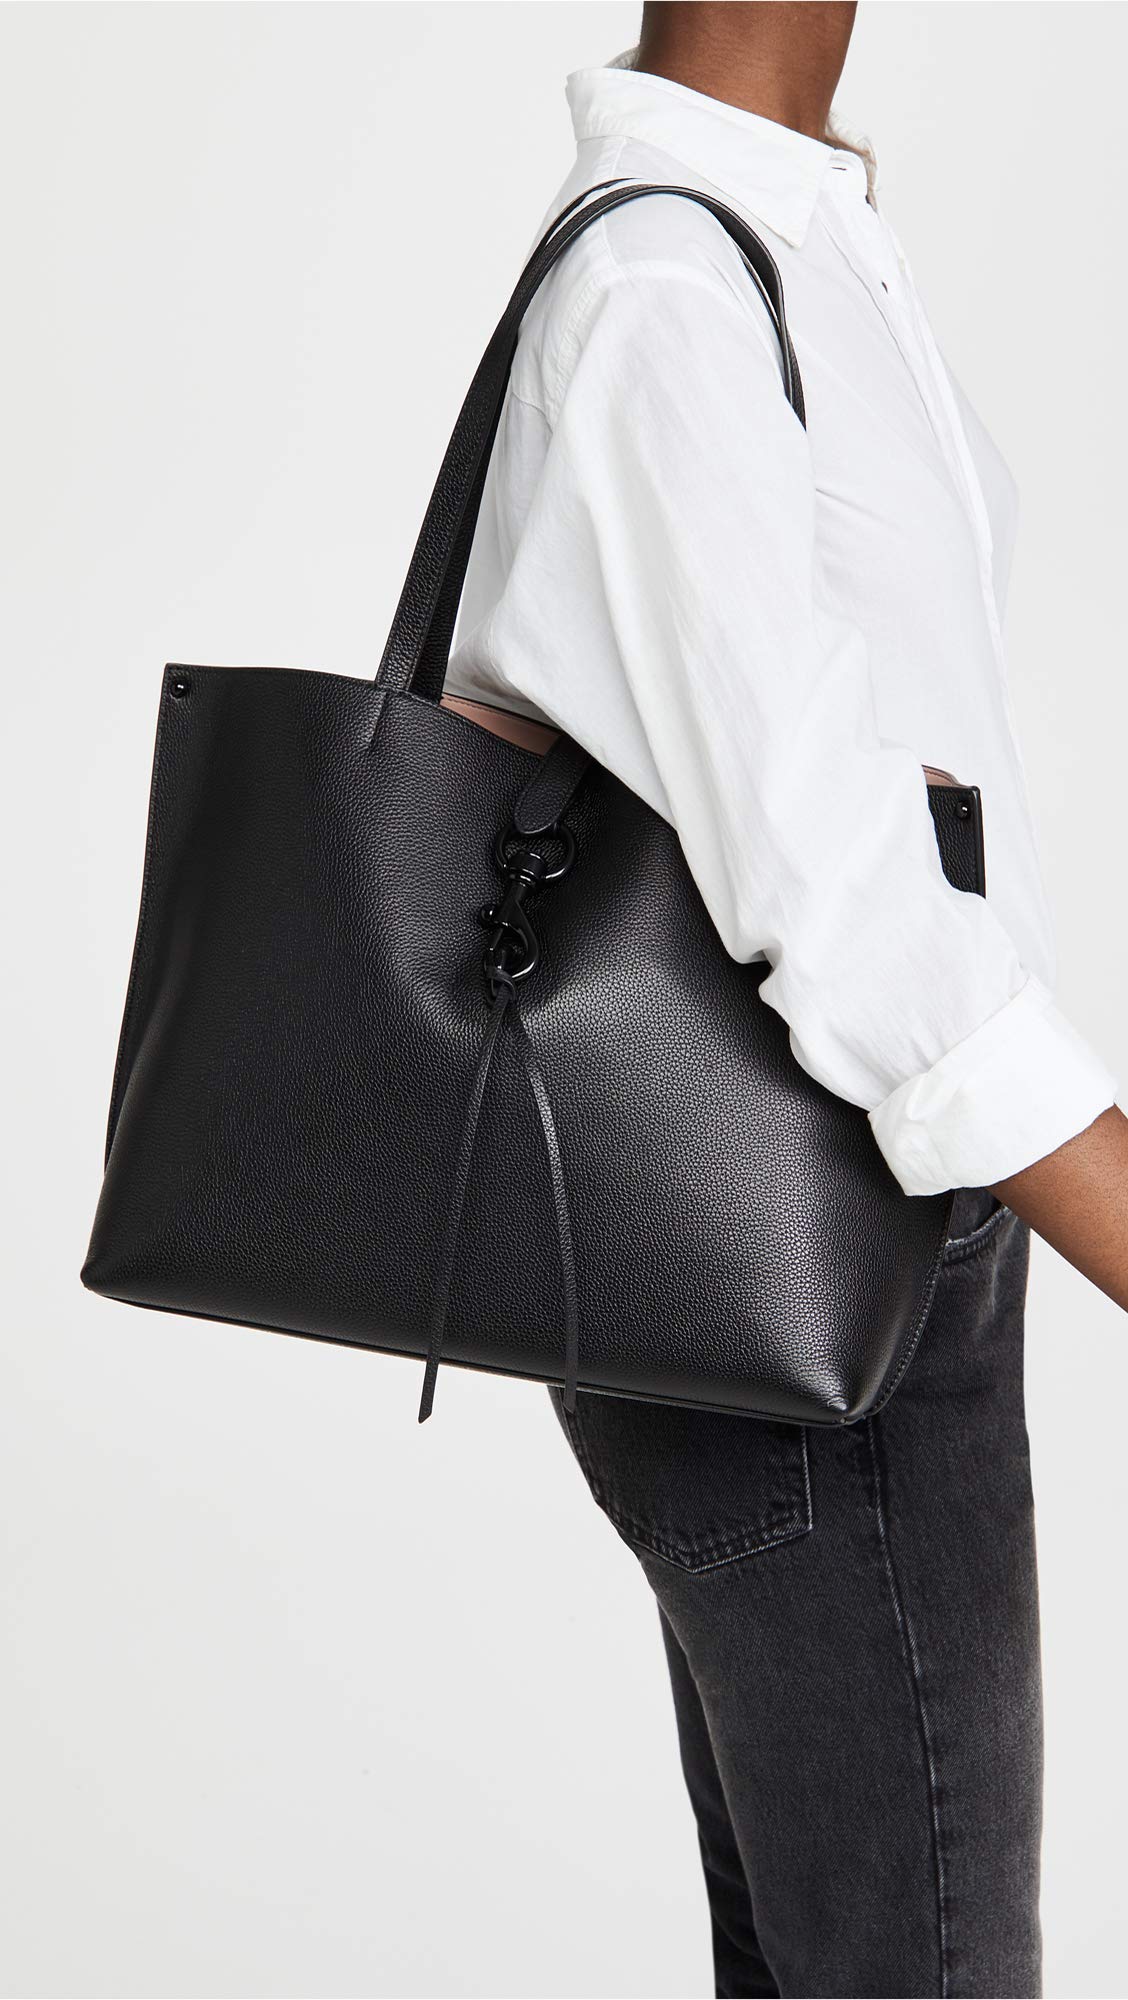 Rebecca Minkoff Megan Tote Bag for Women – Quality Leather Handbags for Women, Versatile Women’s Tote Handbag, Leather Purse & Work Bag, Large Tote Bag